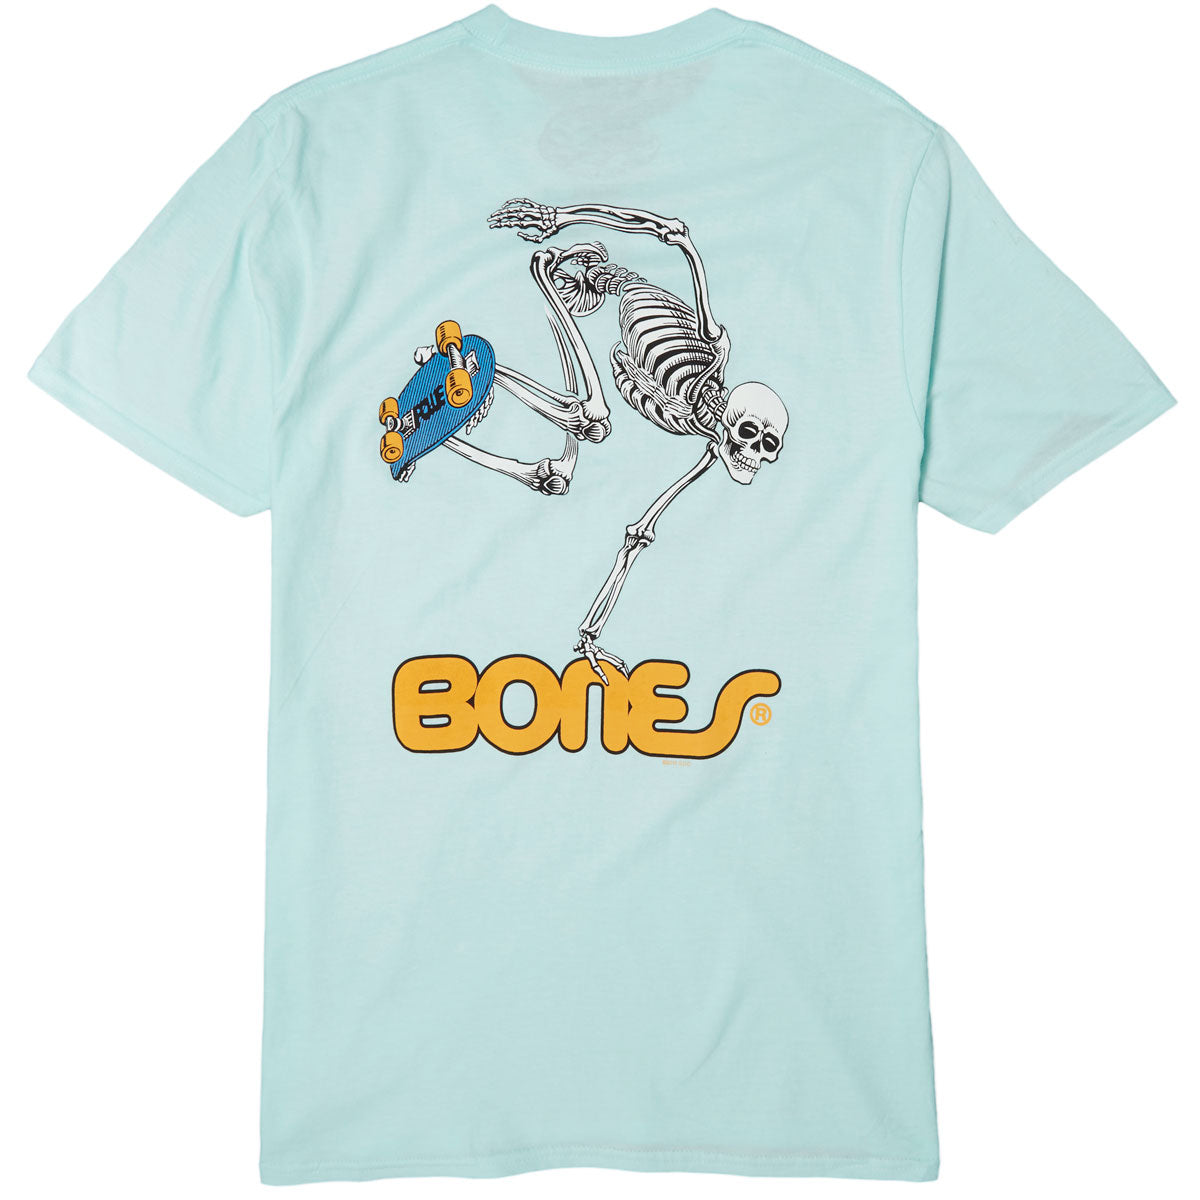 Powell-Peralta Skateboard Skeleton T-Shirt - Teal Ice image 1